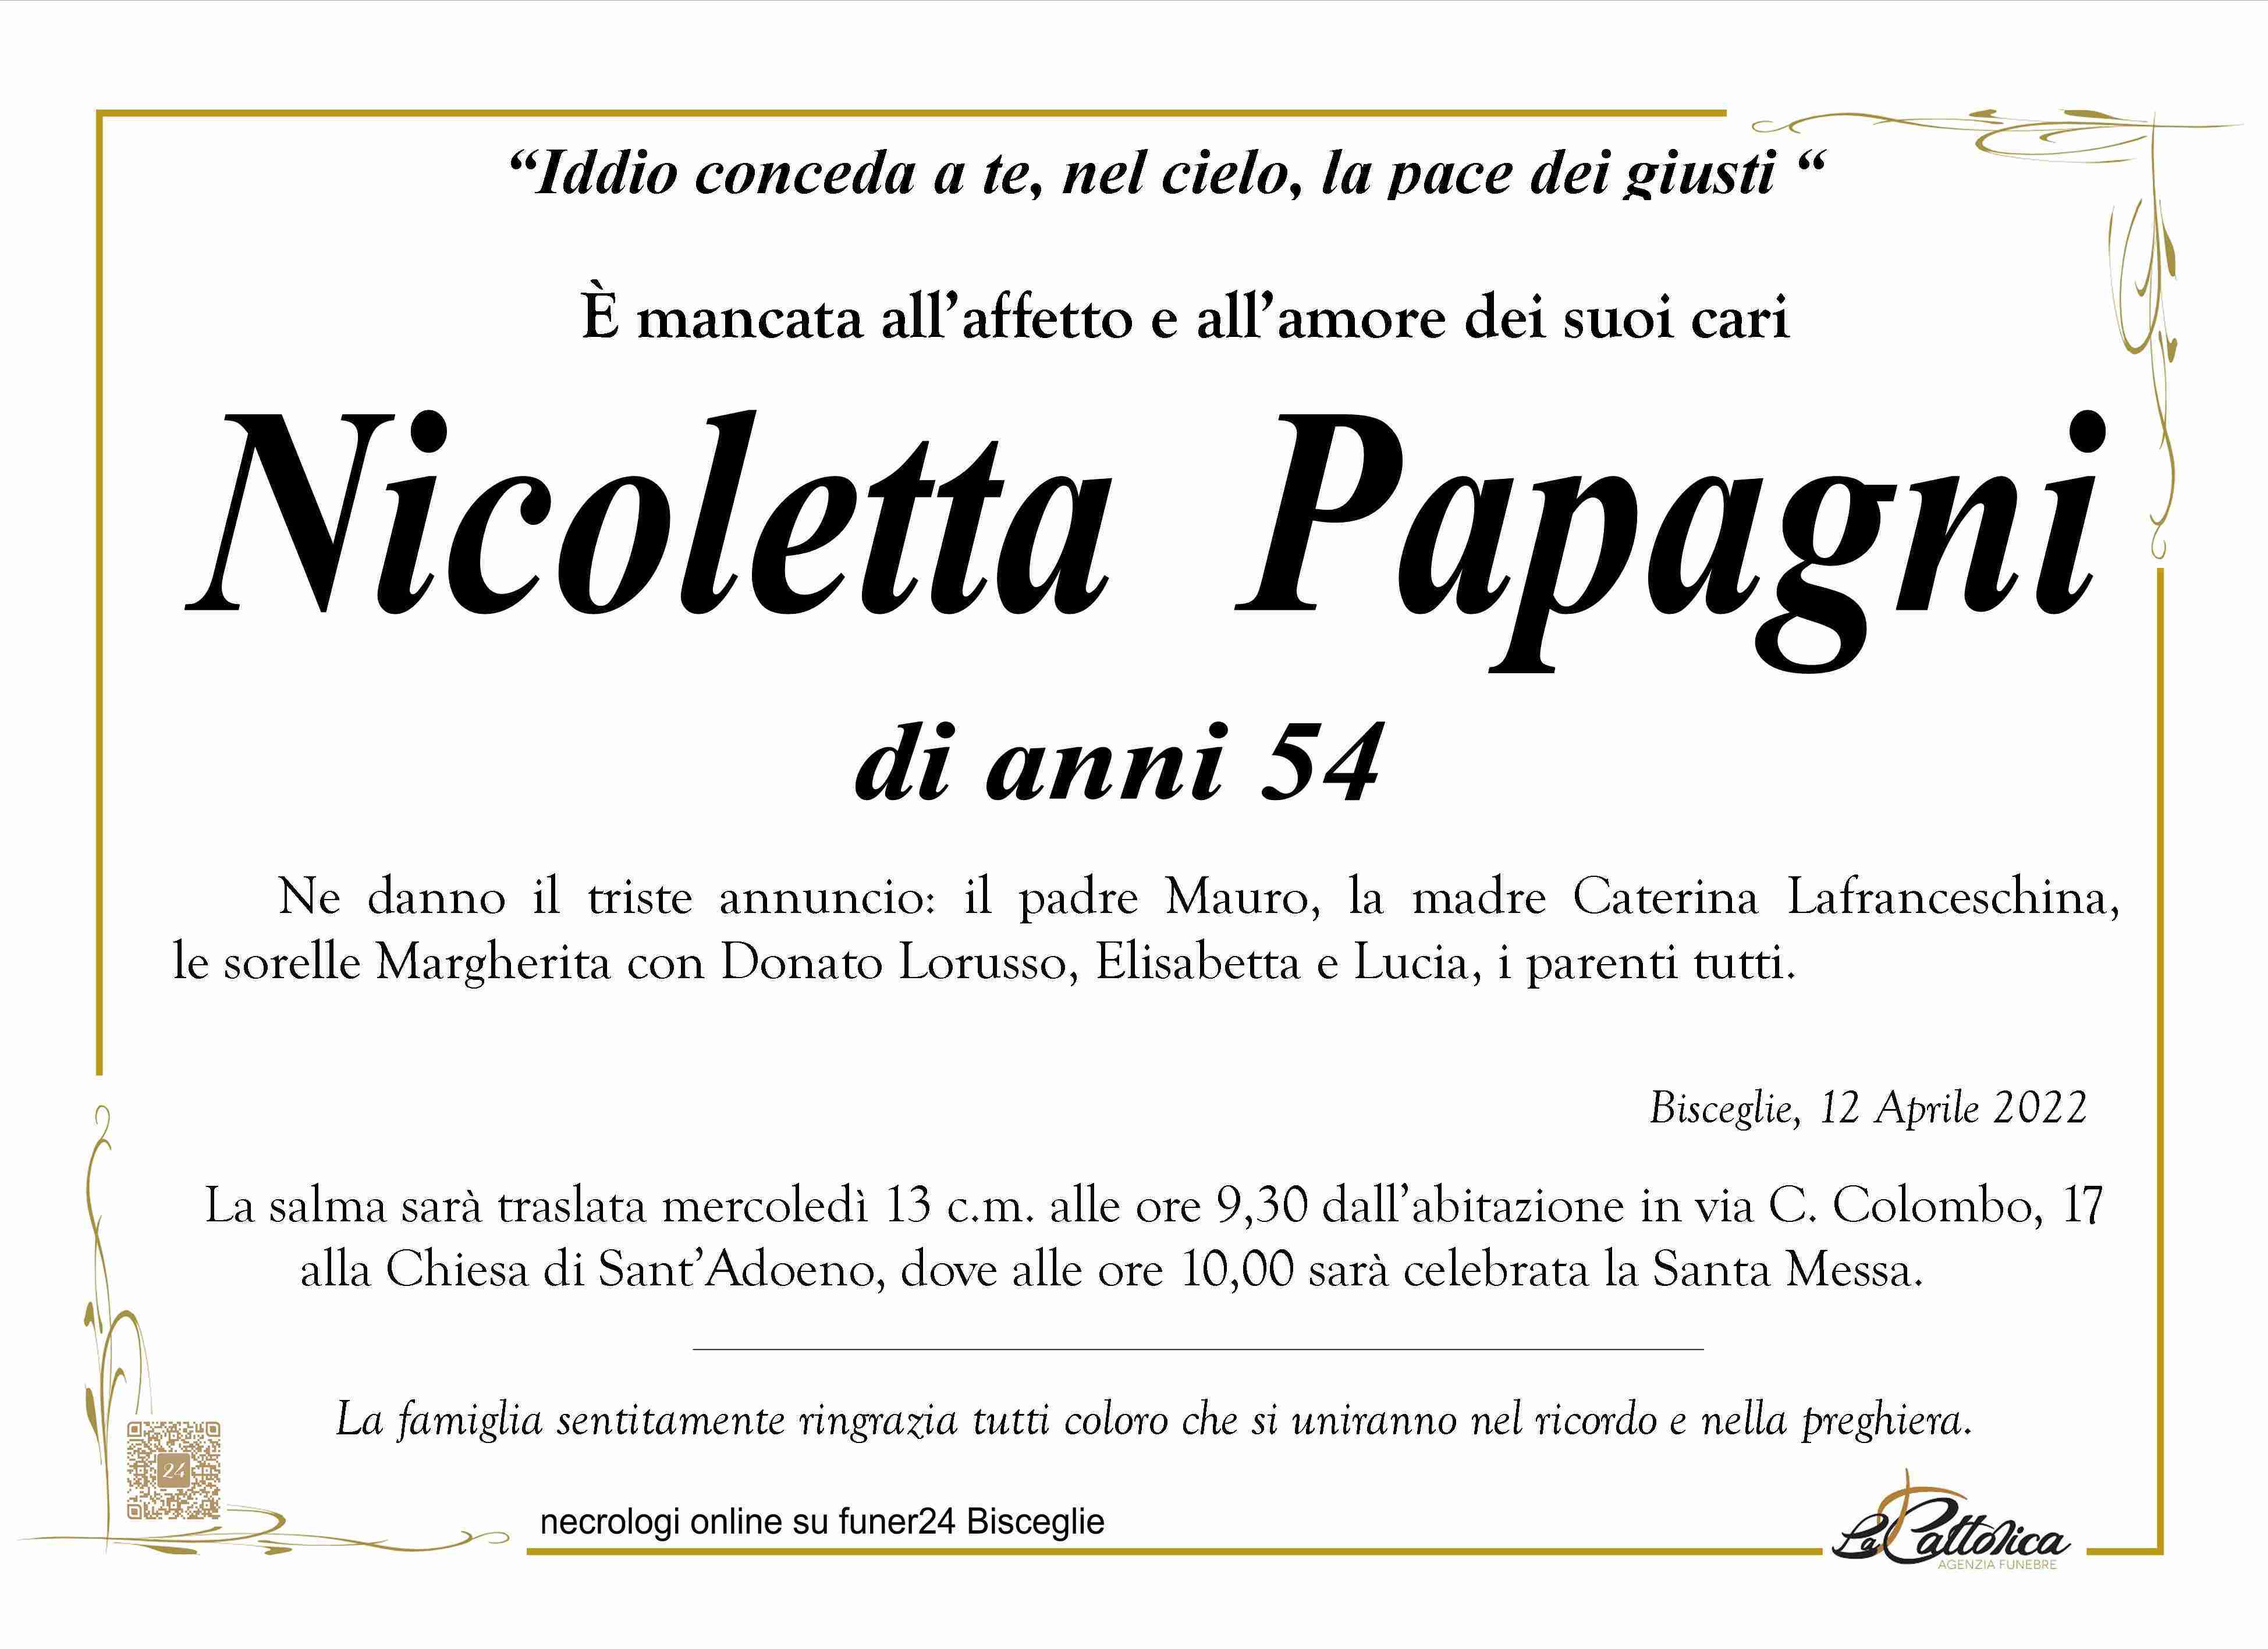 Nicoletta Papagni